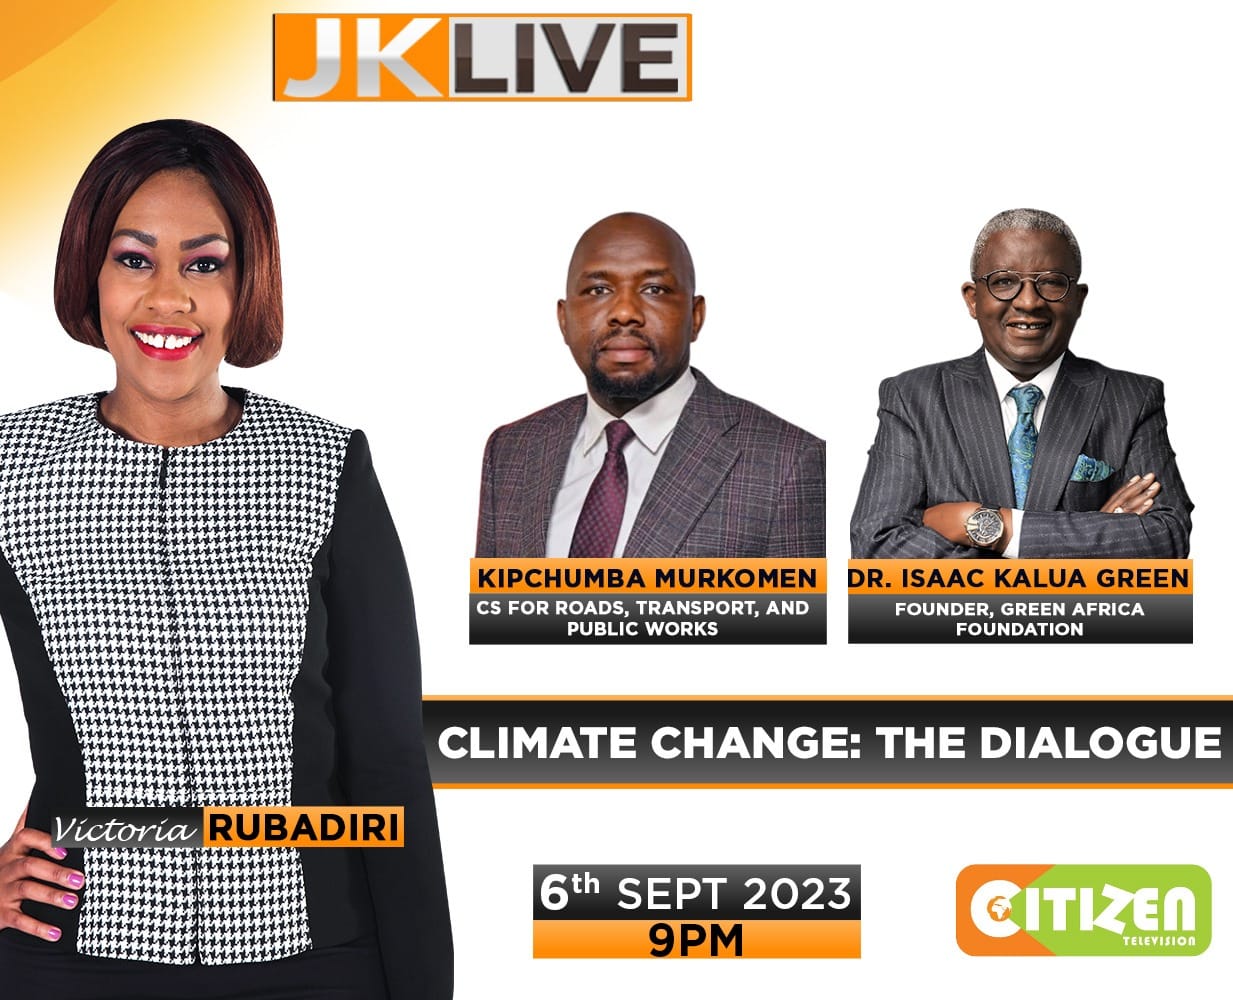 CS at Citizen TV JKL Live on Climate Change